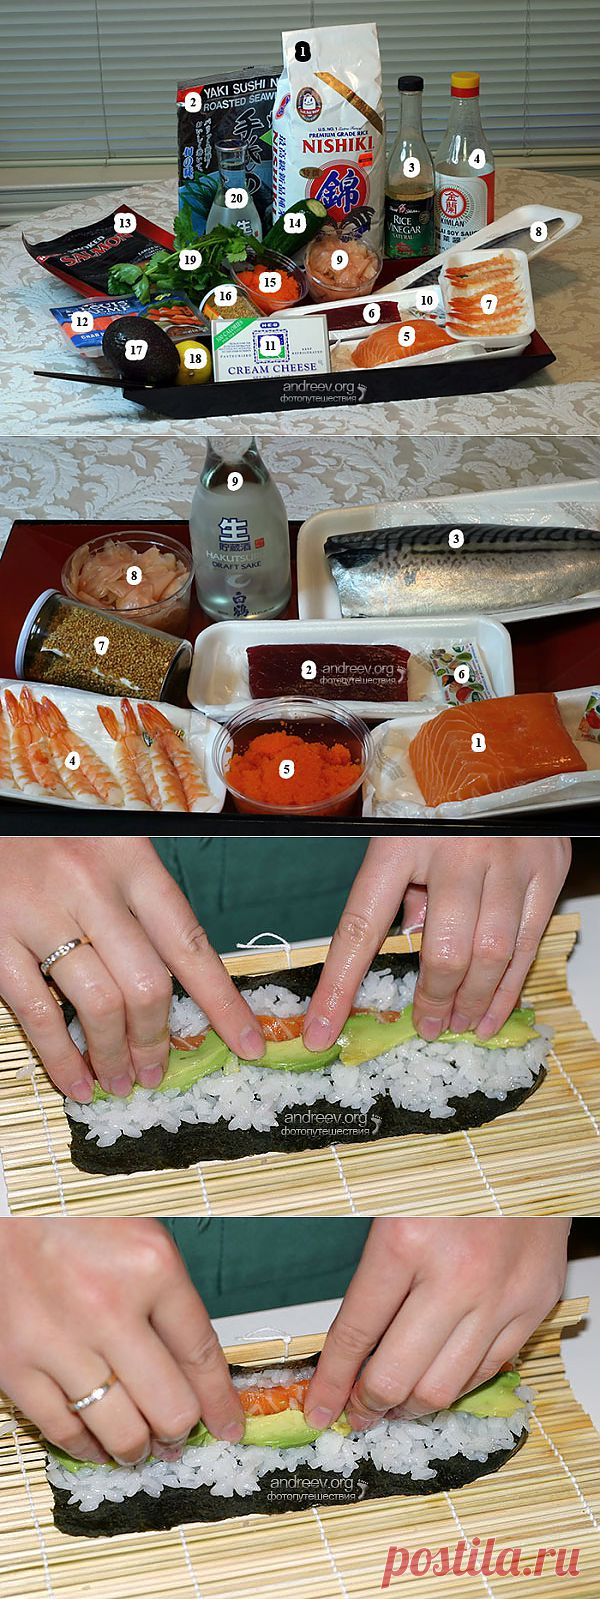 Как приготовить суши в домашних условиях Руководство How to make sushi at home